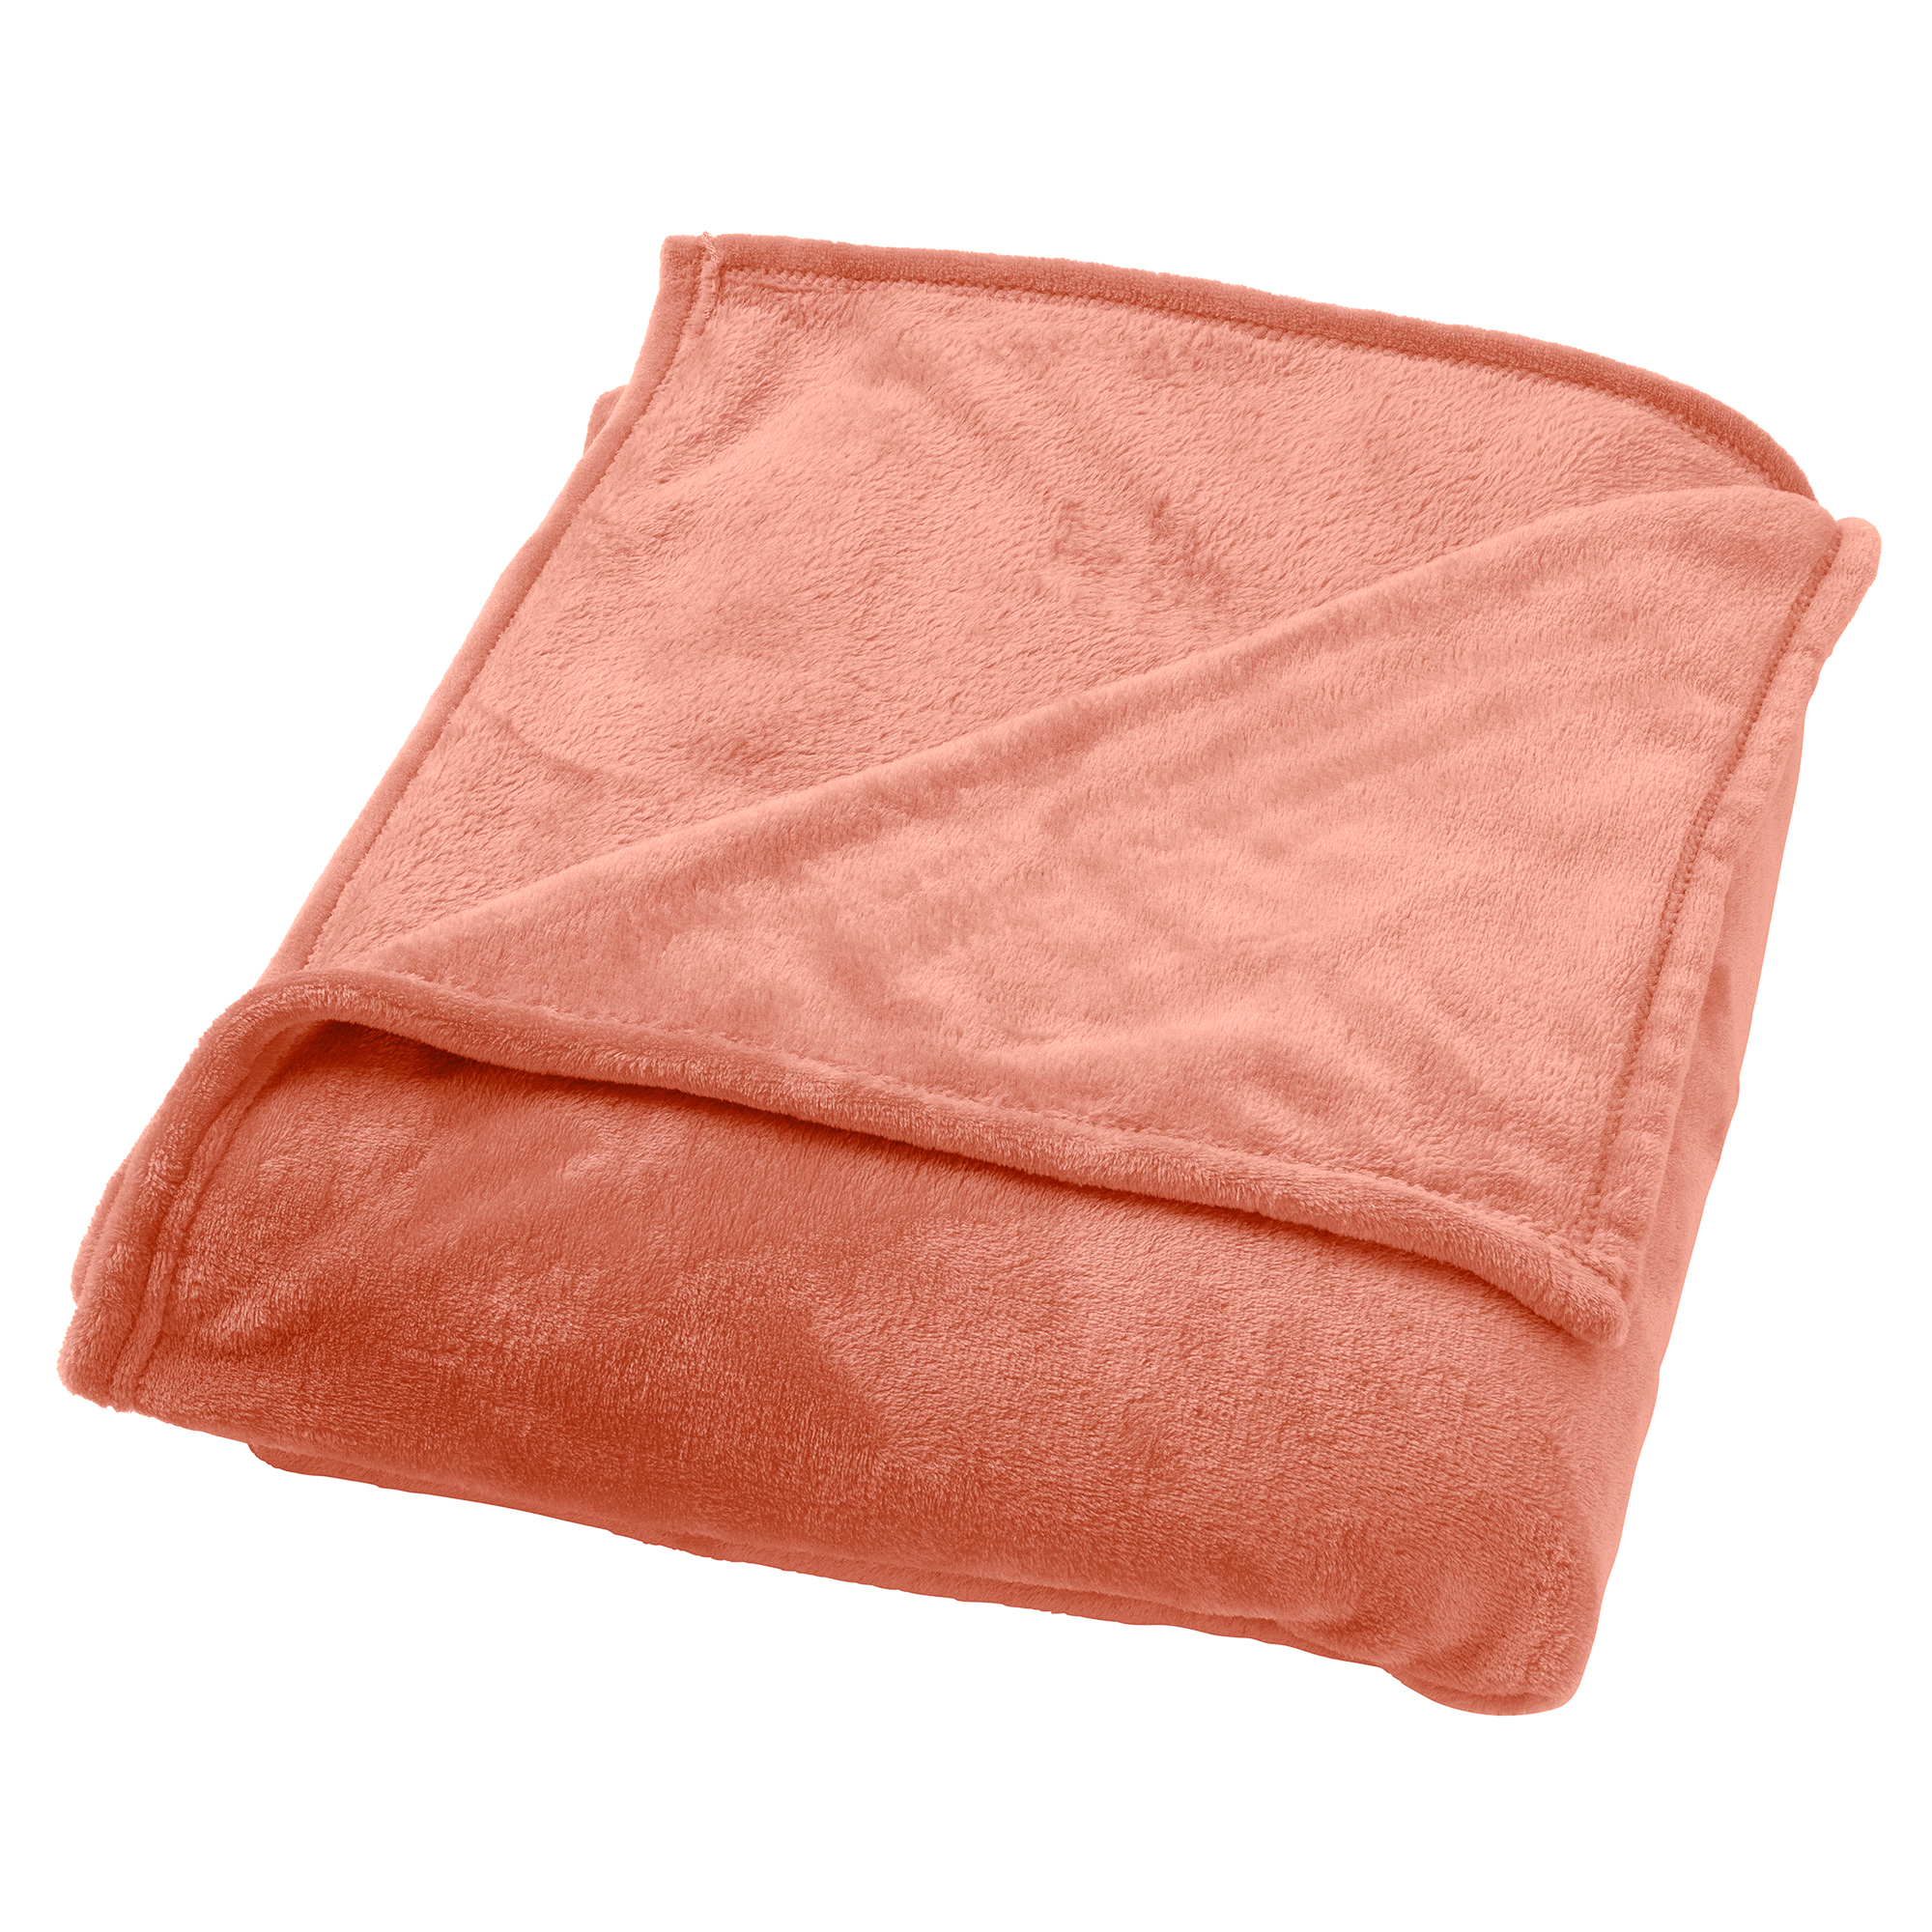 BILLY - Plaid flannel fleece 150x200 cm - Muted Clay - roze - superzacht